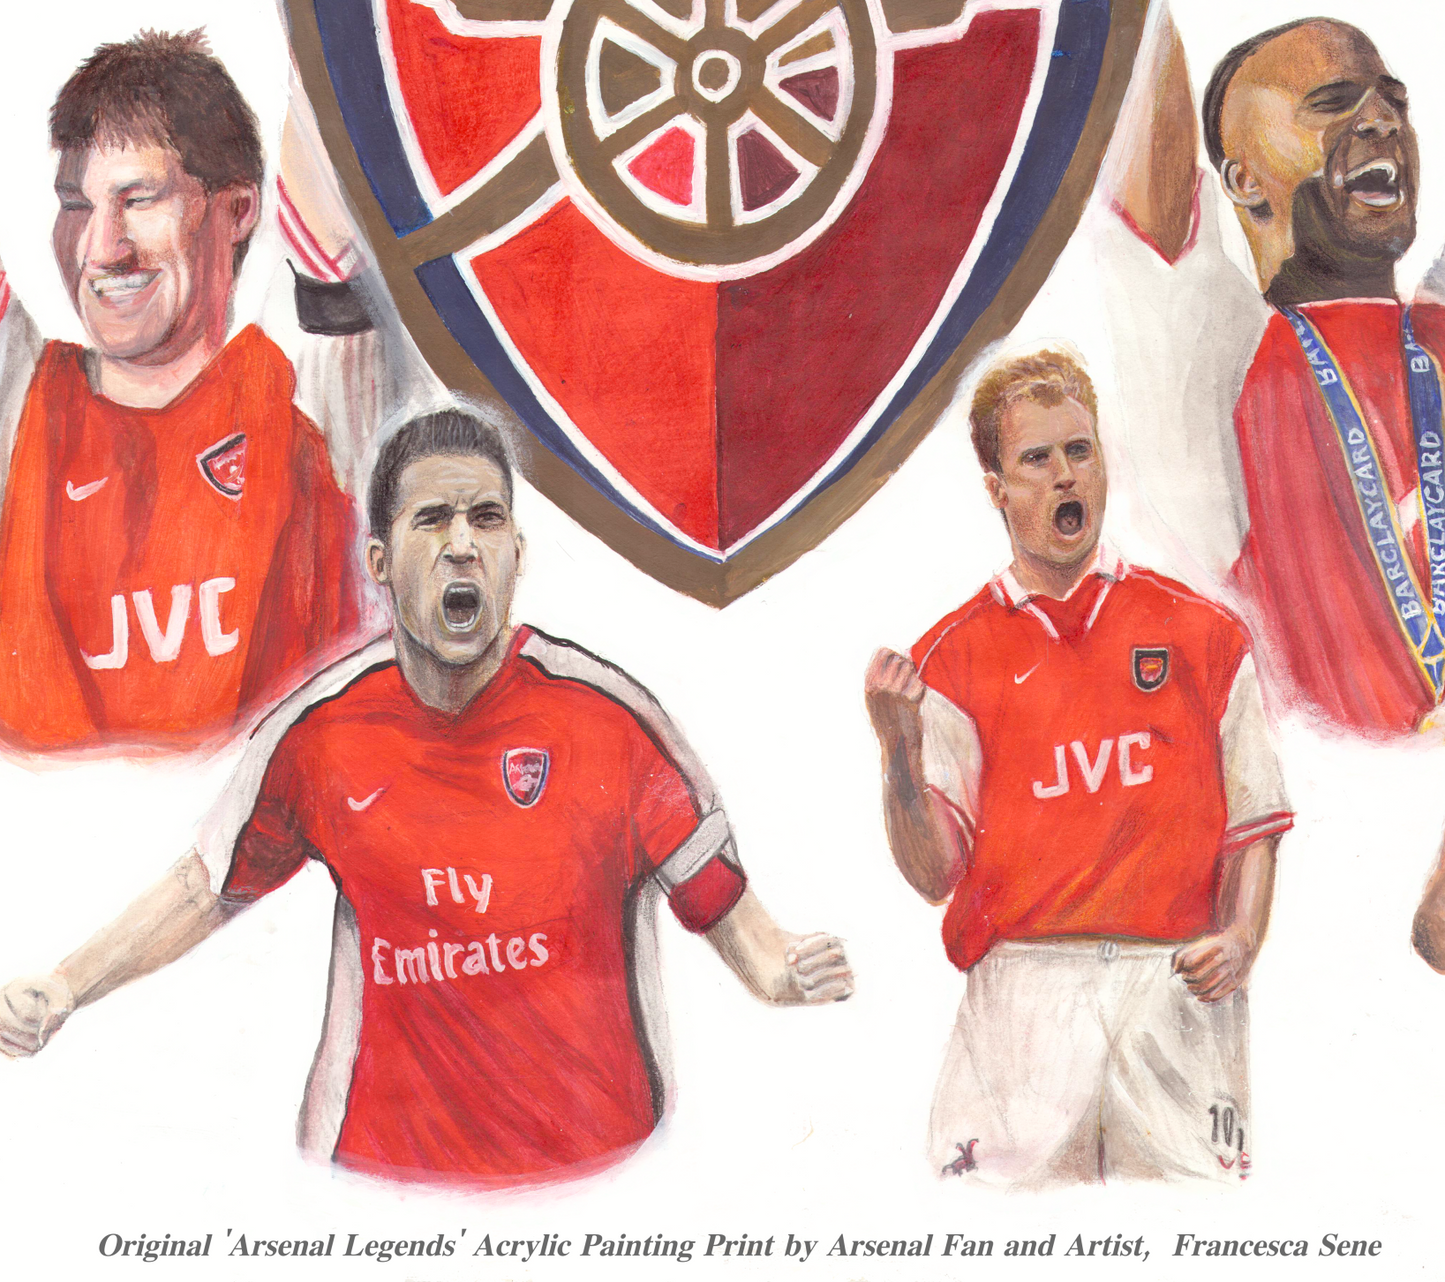 Arsenal Legends Mug